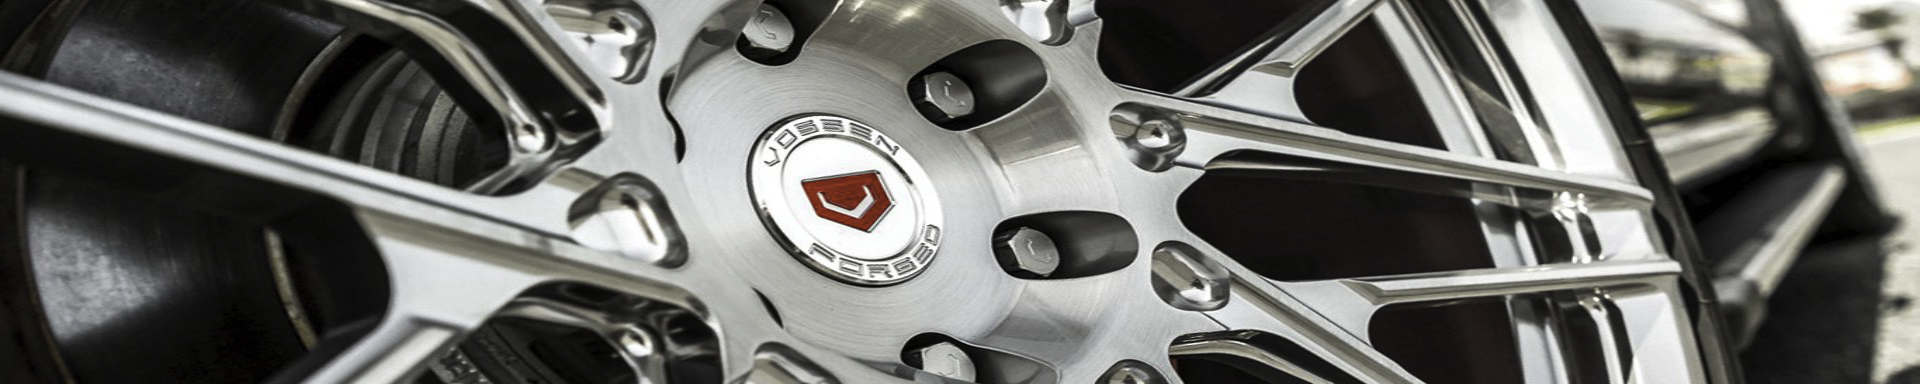 Forged Wheels & Rims | GarageAndFab.com | Munro Industries gf-100103080309